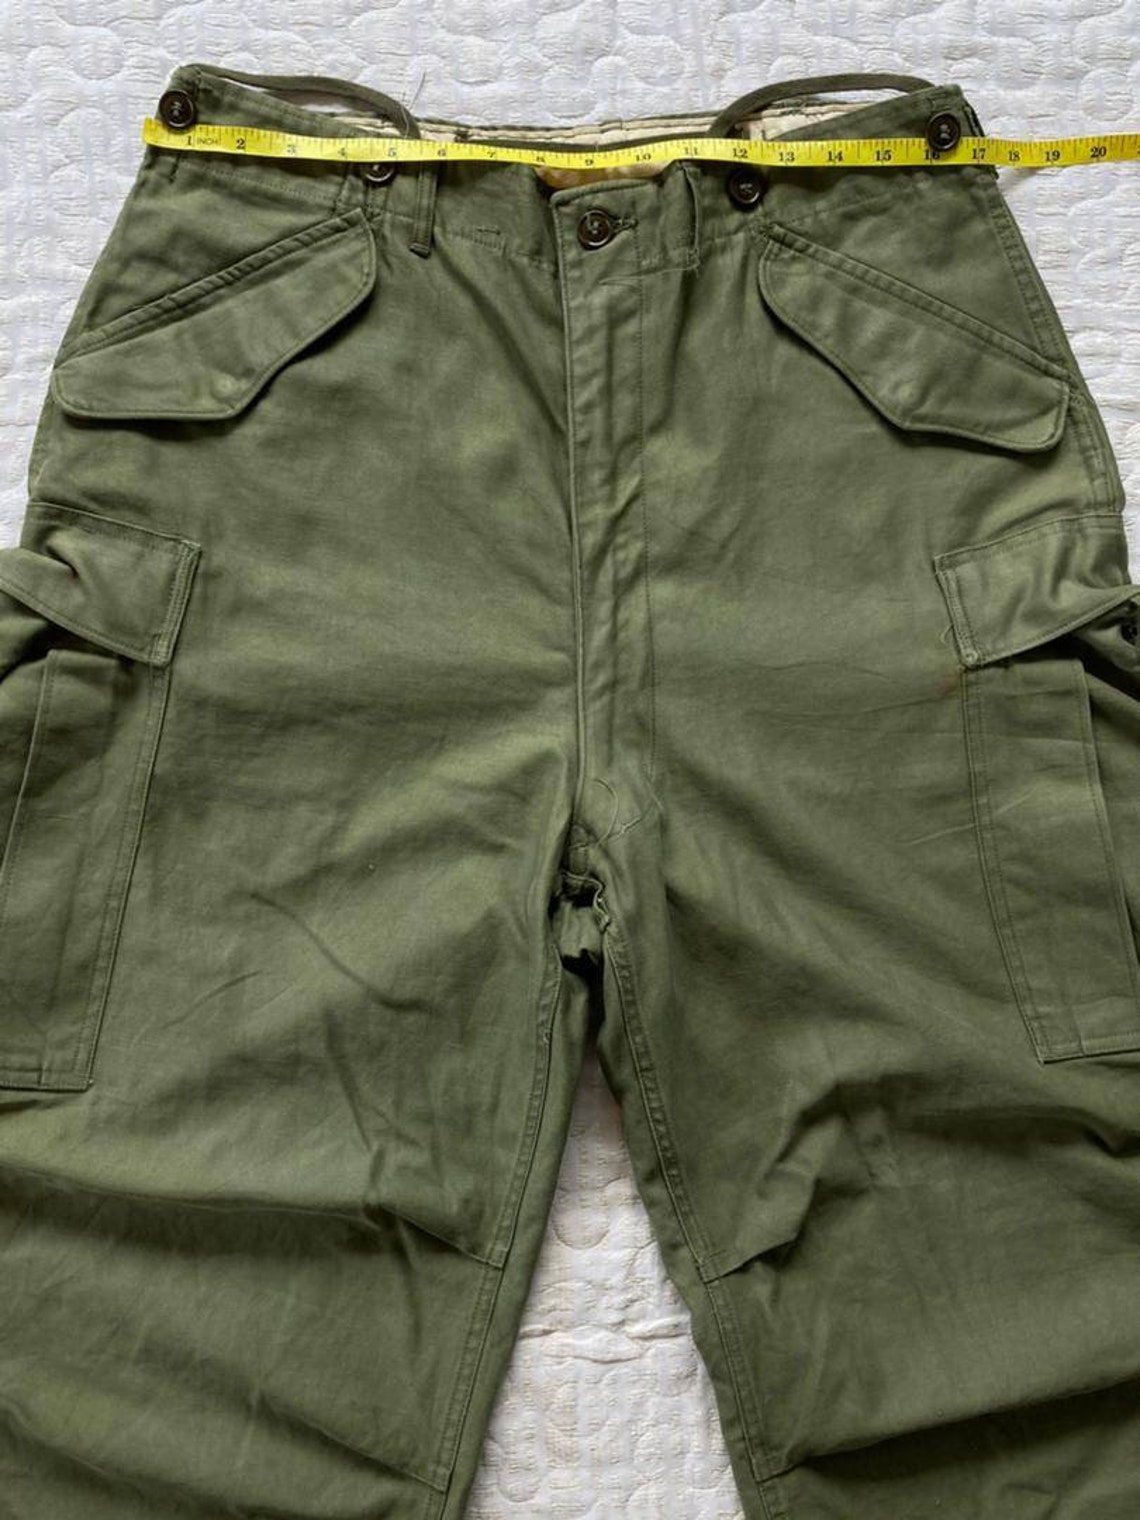 US Army Korean War M-1951 Field Trouser Pants | Etsy